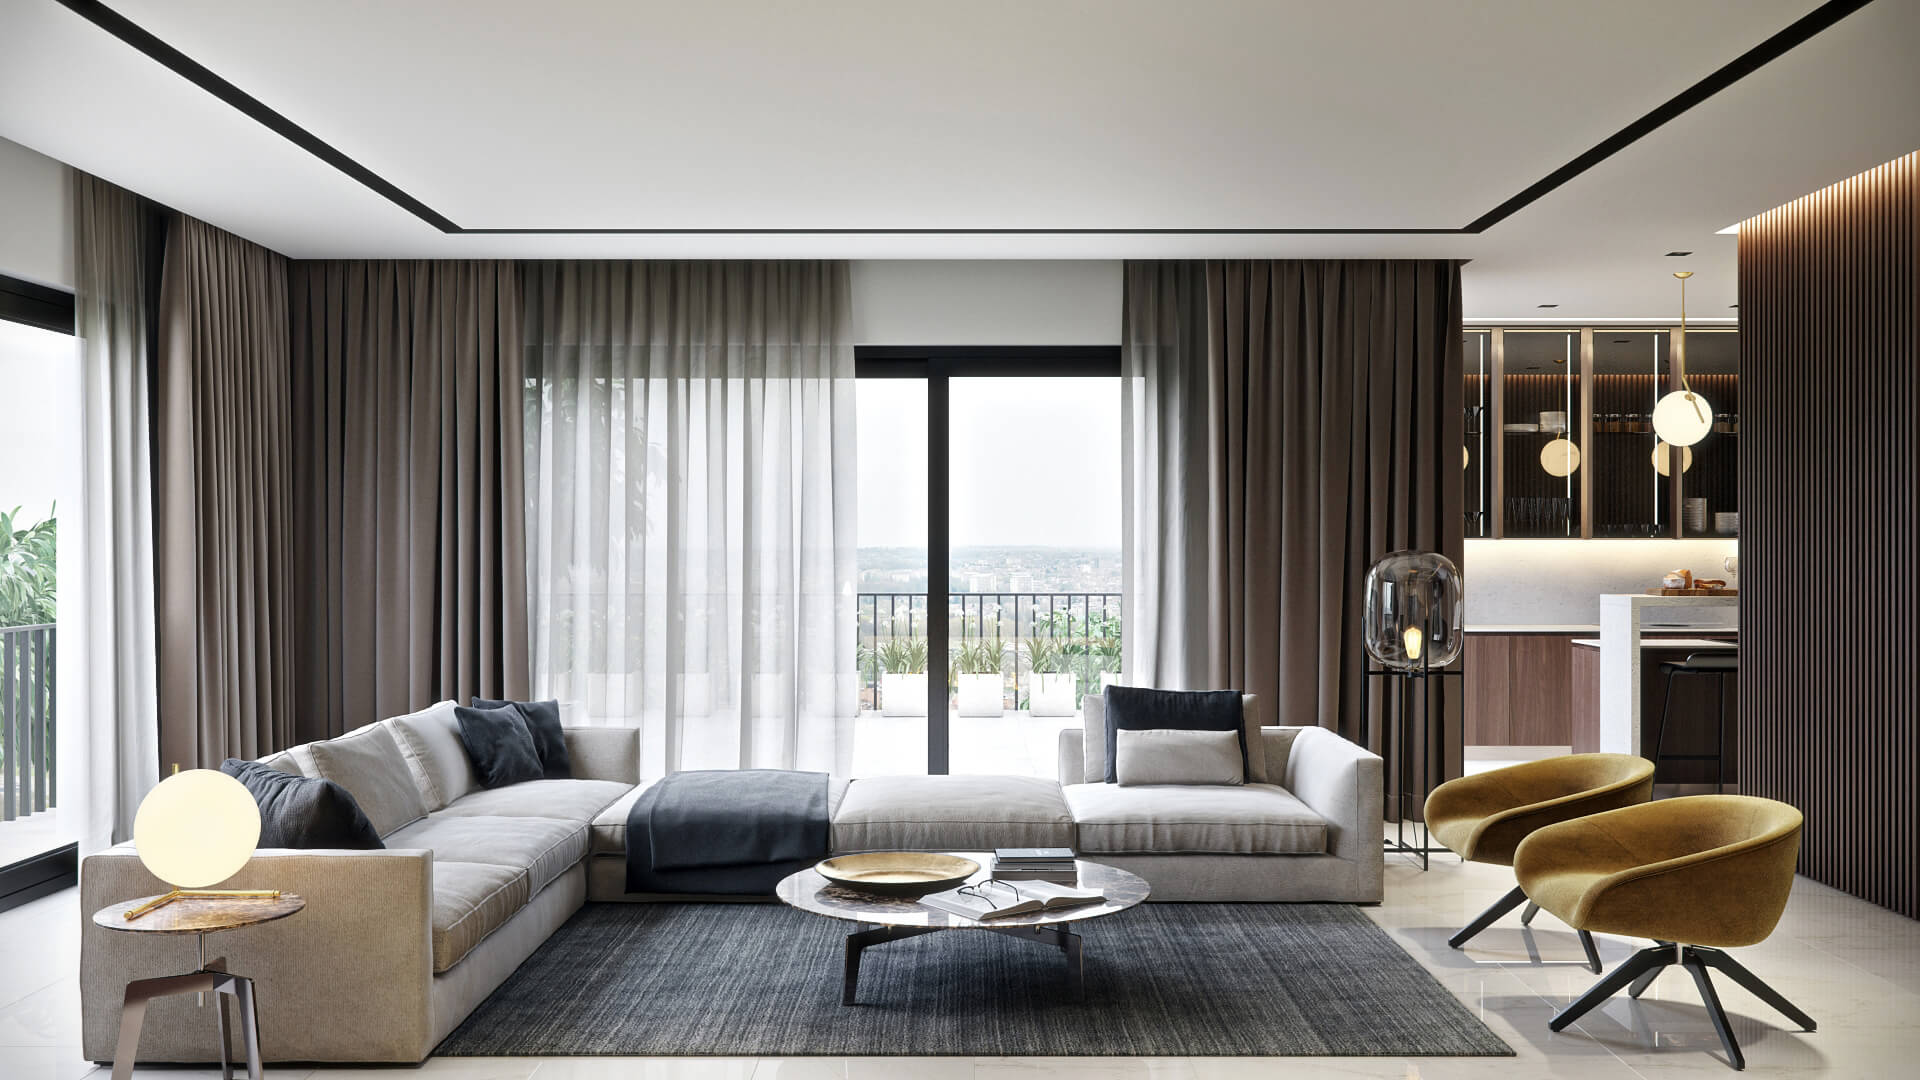 realistic-architectural-rendering-living-room-design - Ronen Bekerman - 3D  Architectural Visualization & Rendering Blog